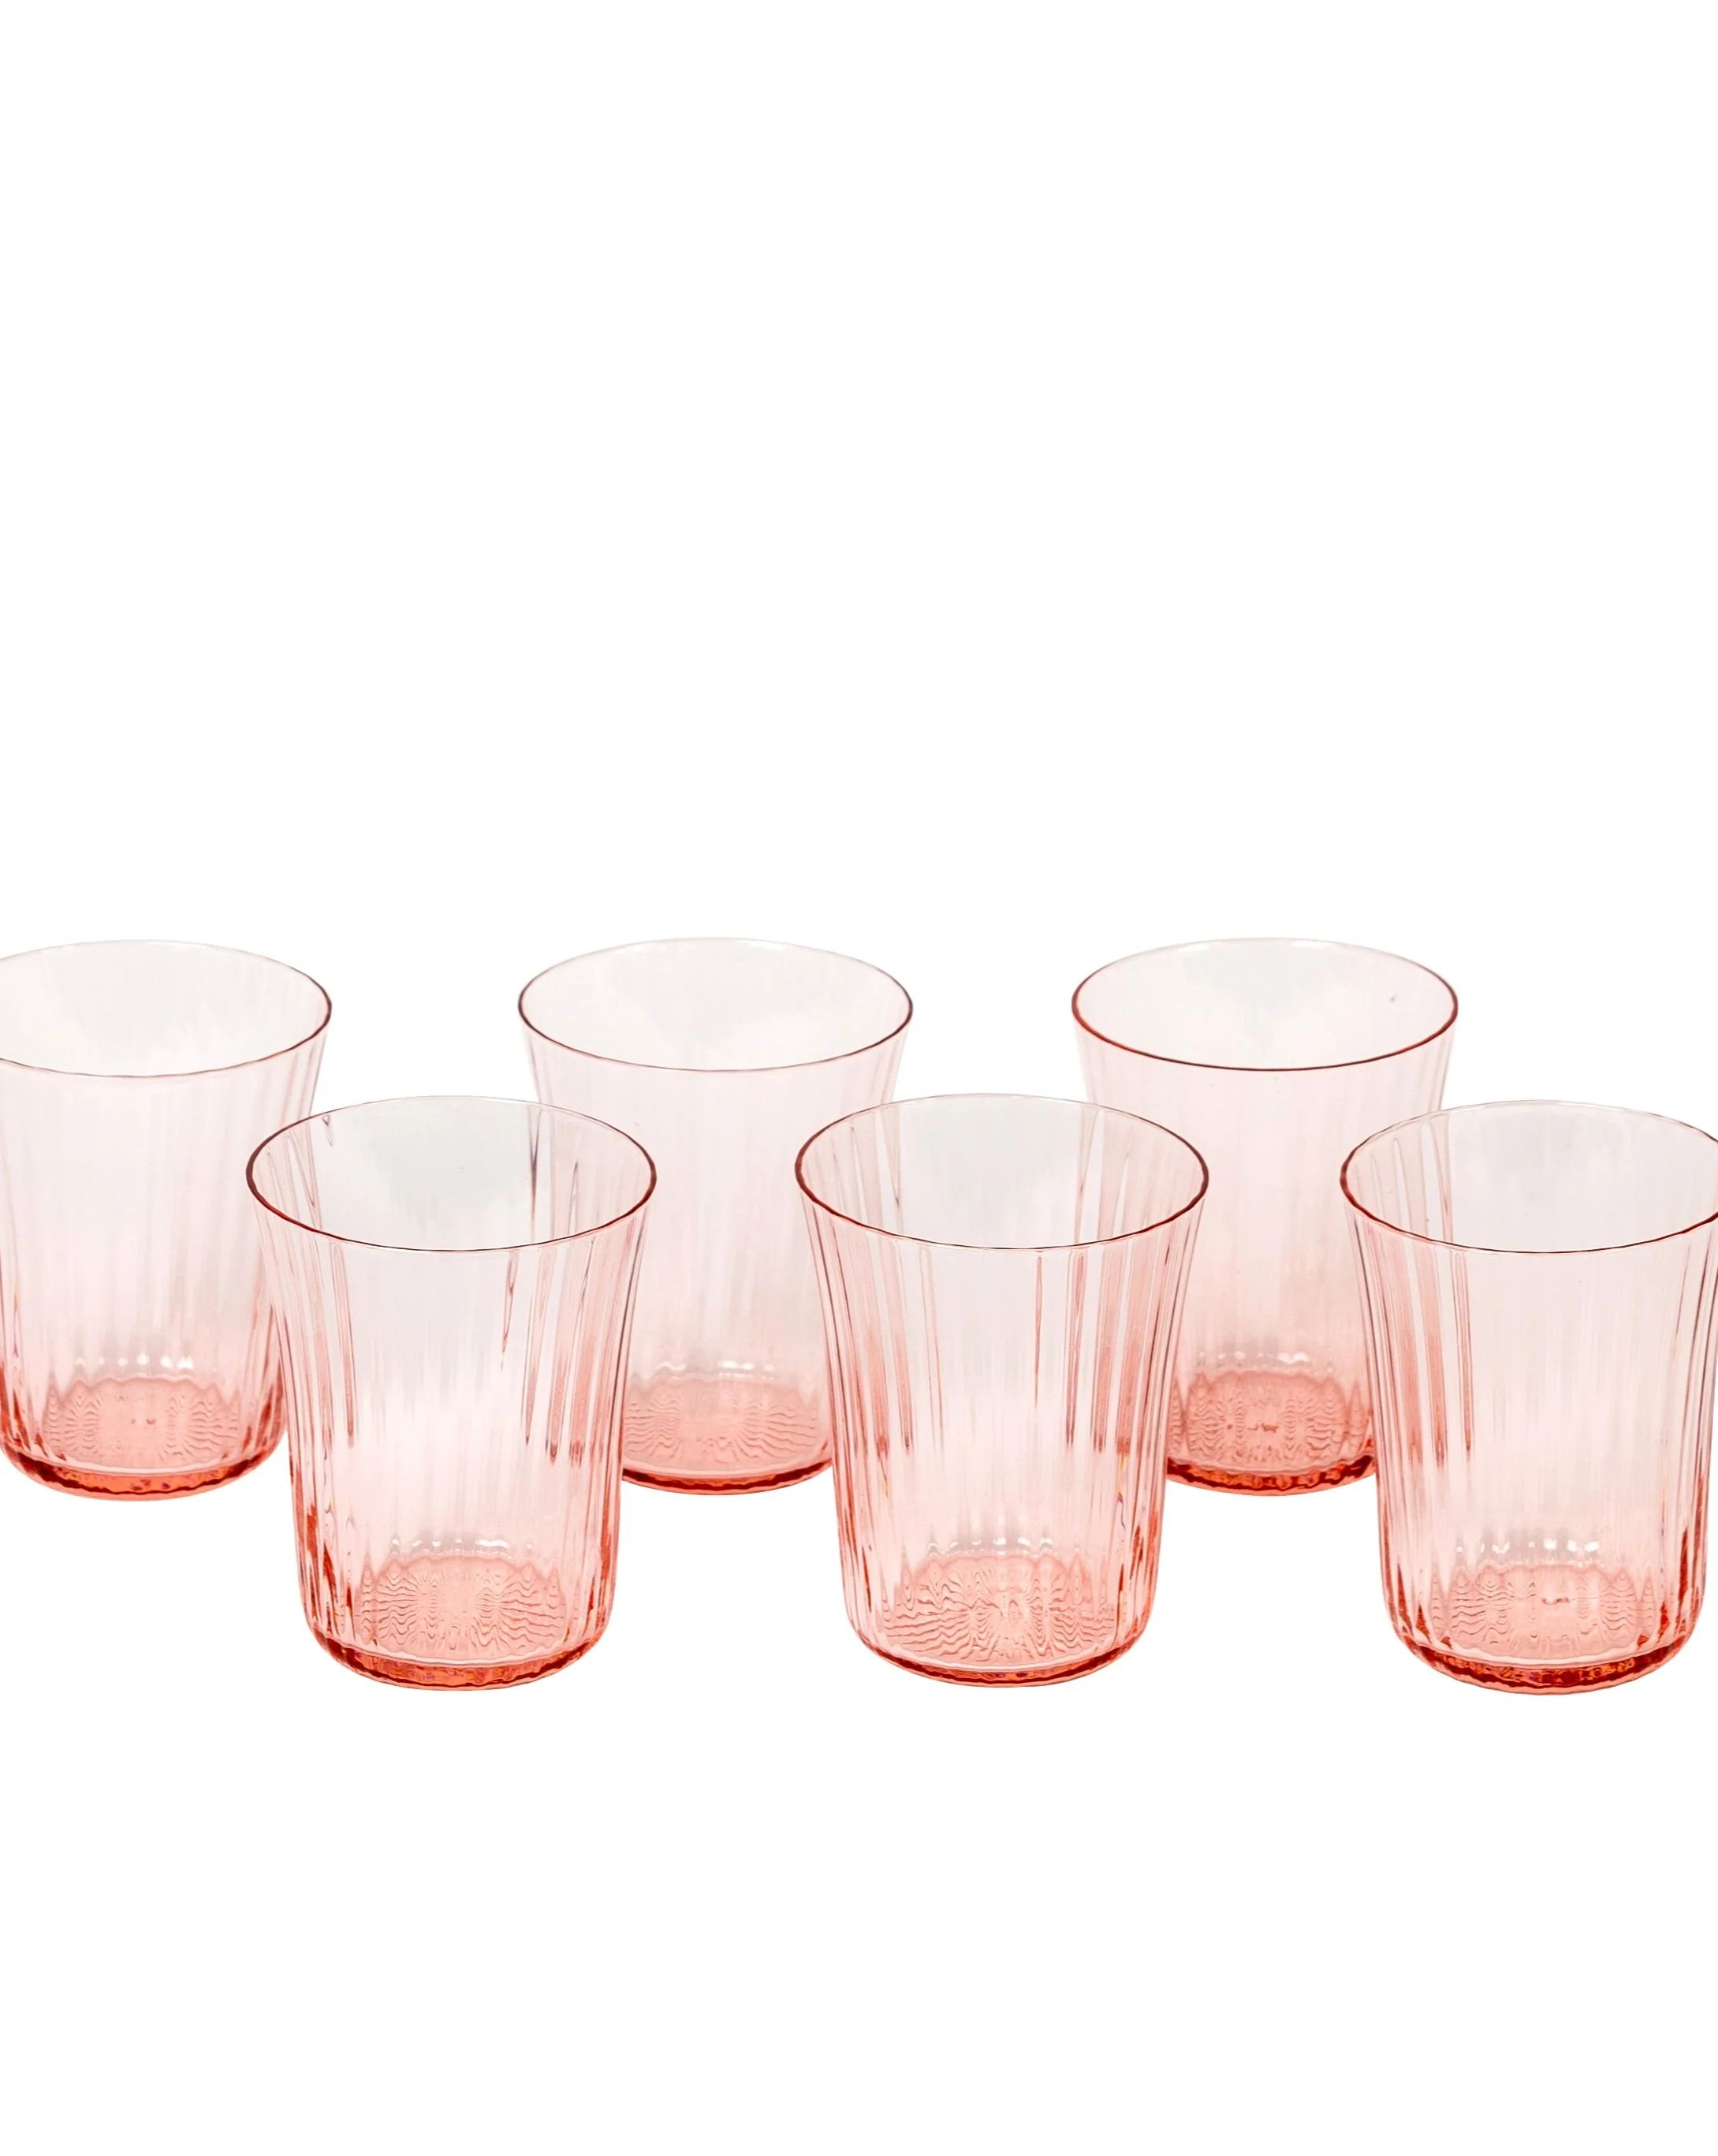 Handmade Blush pink glasses, Set of 6 | Sharland England